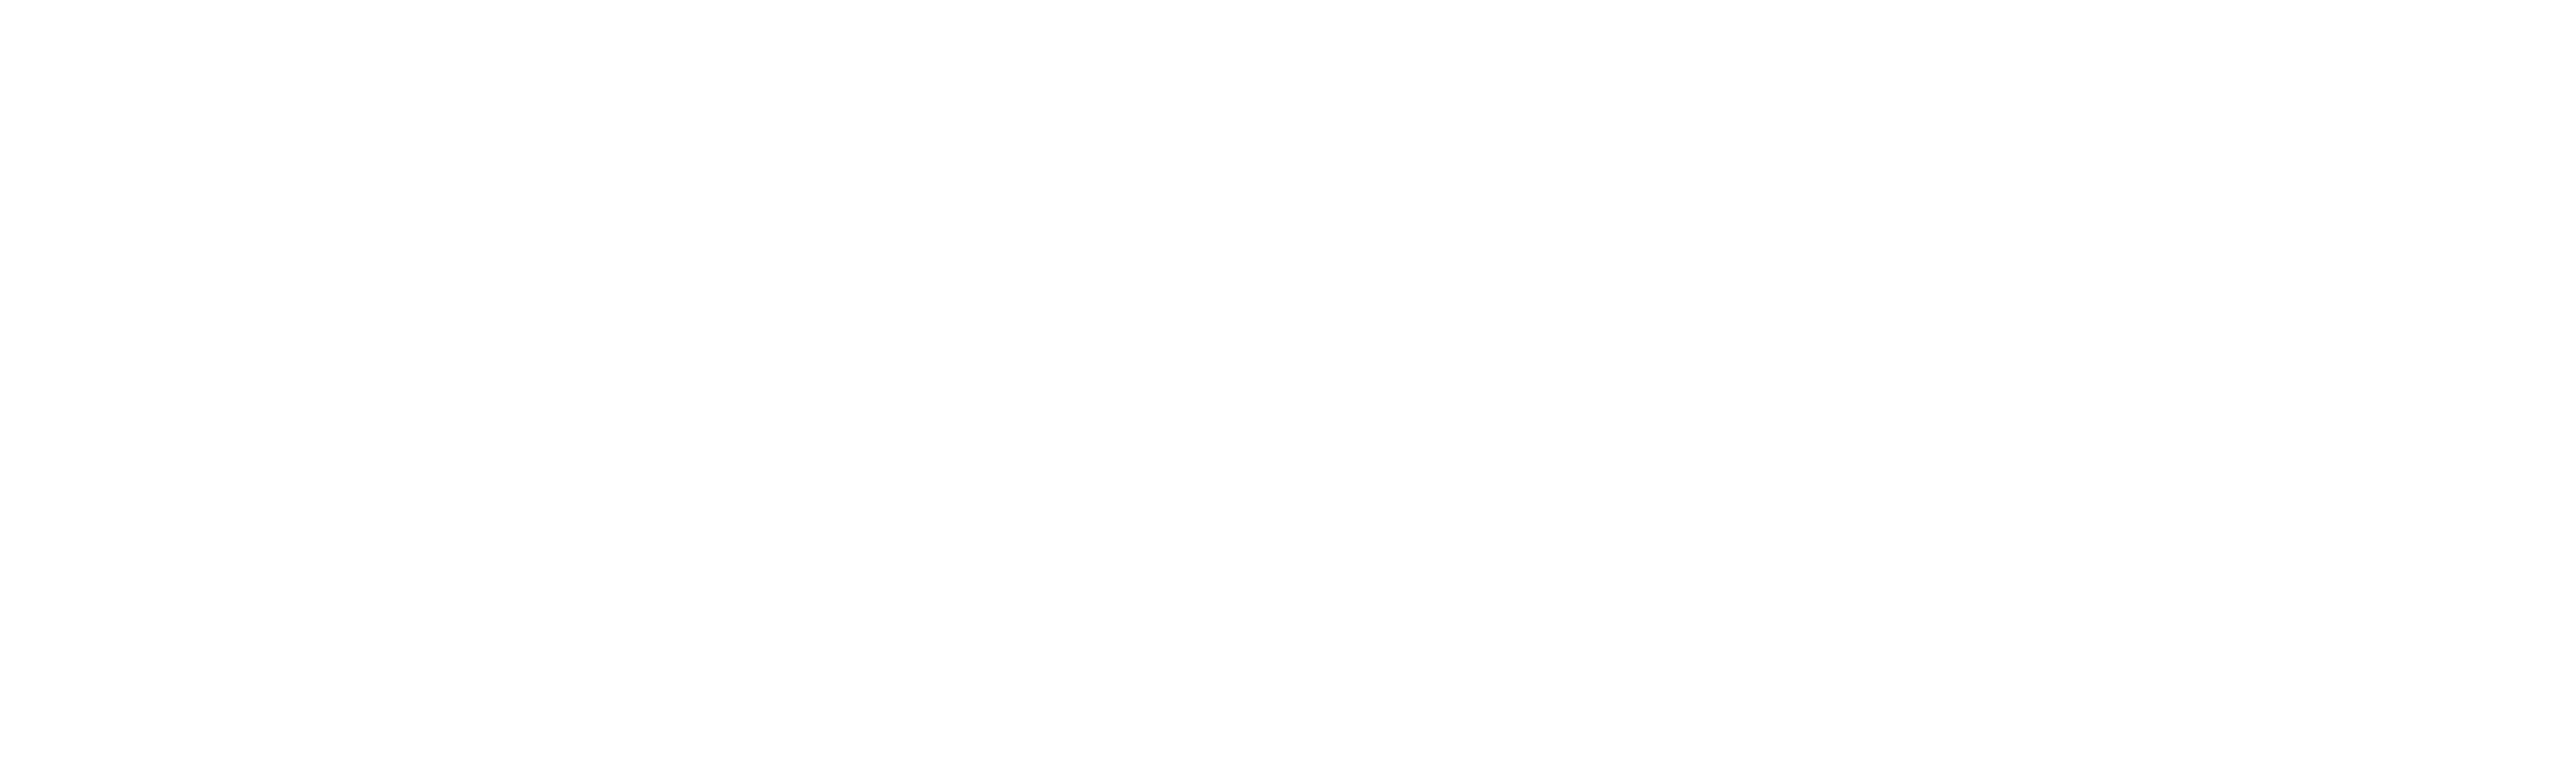 Sundance Retrievers Inc Tagline White Logo R3 25 full